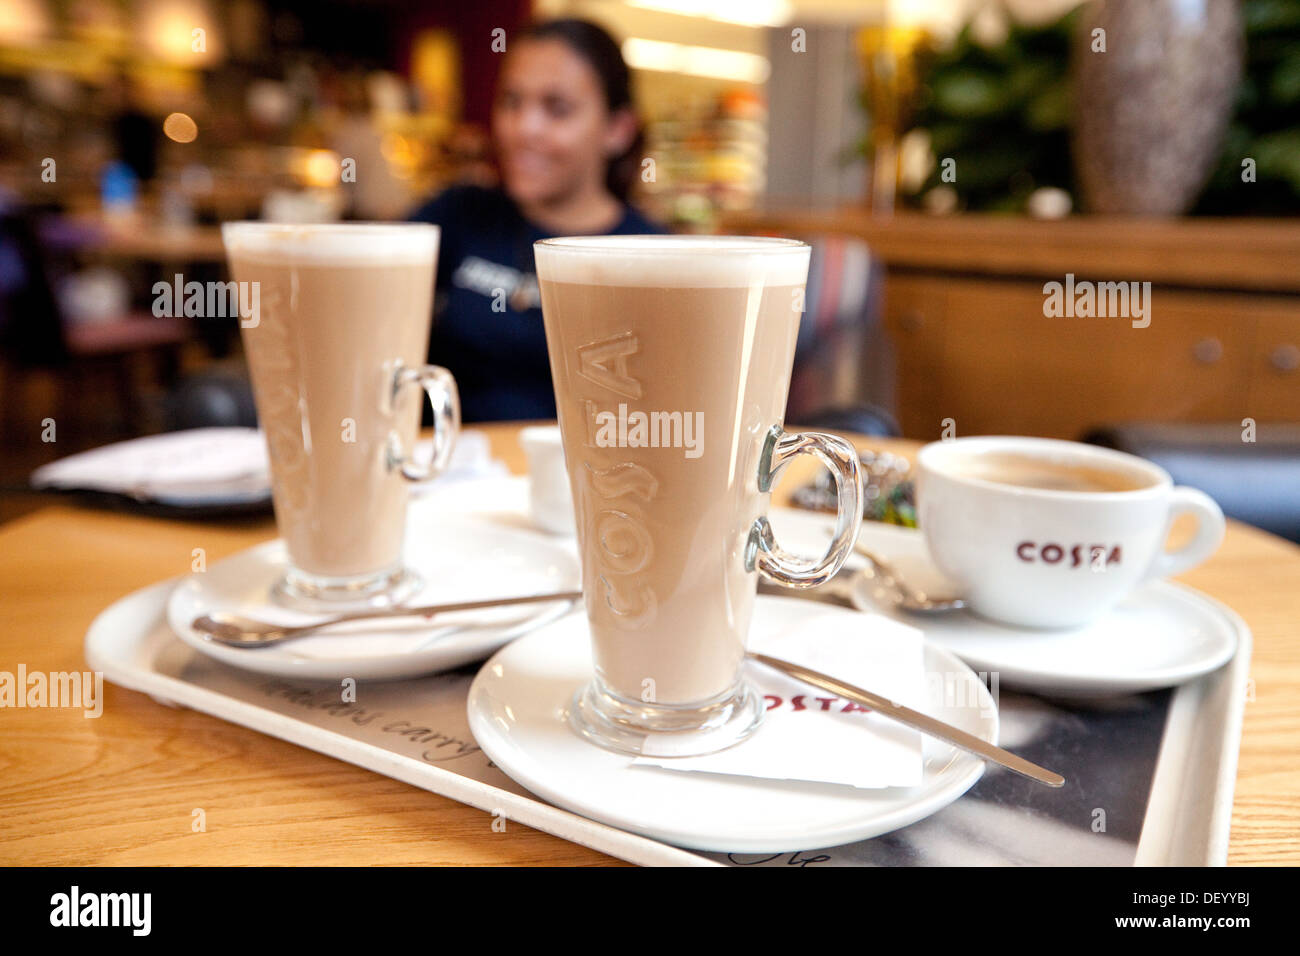 Costa Coffee, latte and americano coffees in a Cost Coffee coffee bar,  Birmingham, UK Stock Photo - Alamy